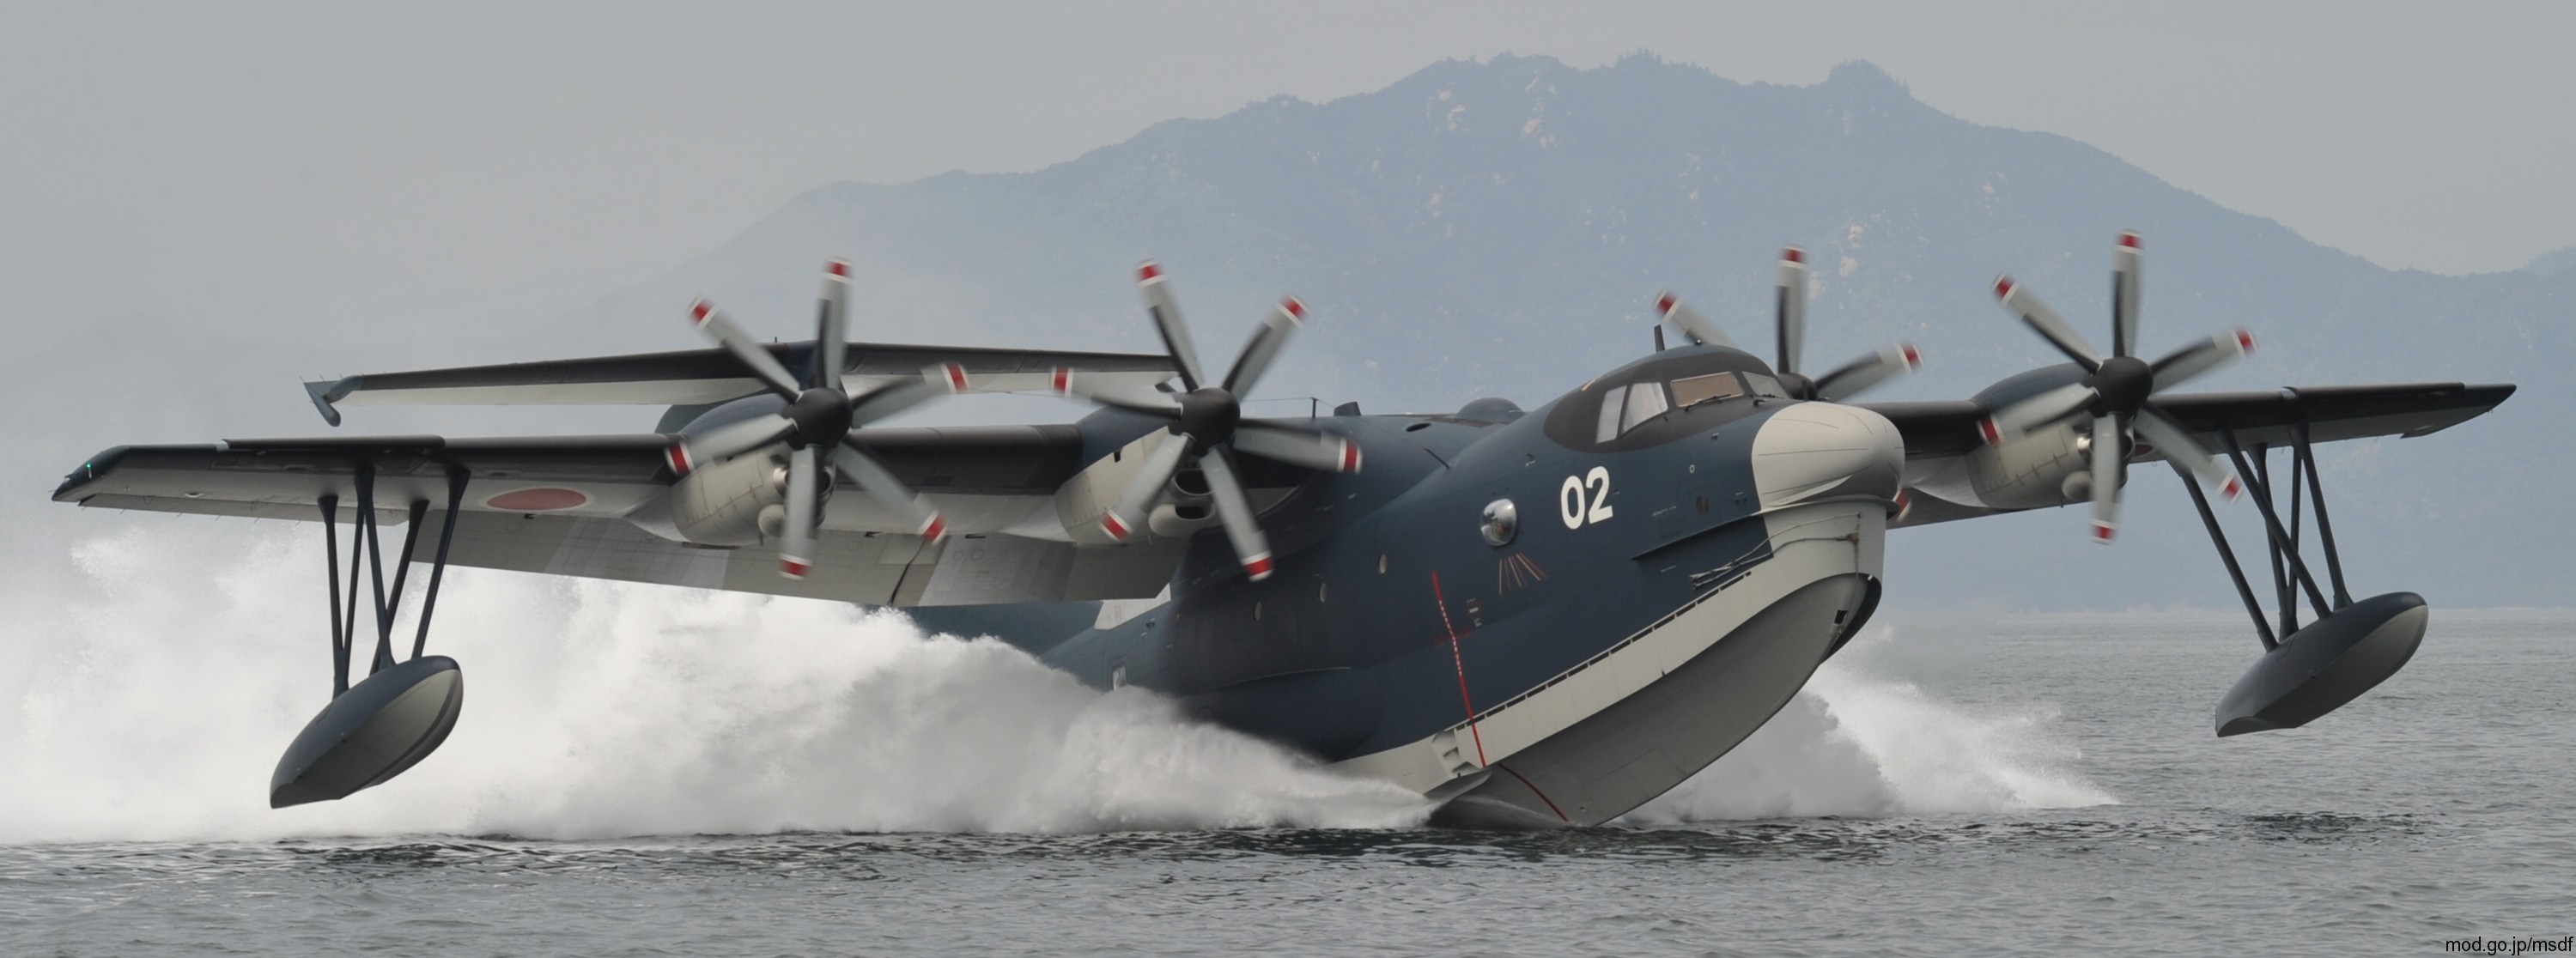 shin maywa us-2 flying boat japan maritime self defense force jmsdf sar 71 squadron atsugi 9902 04